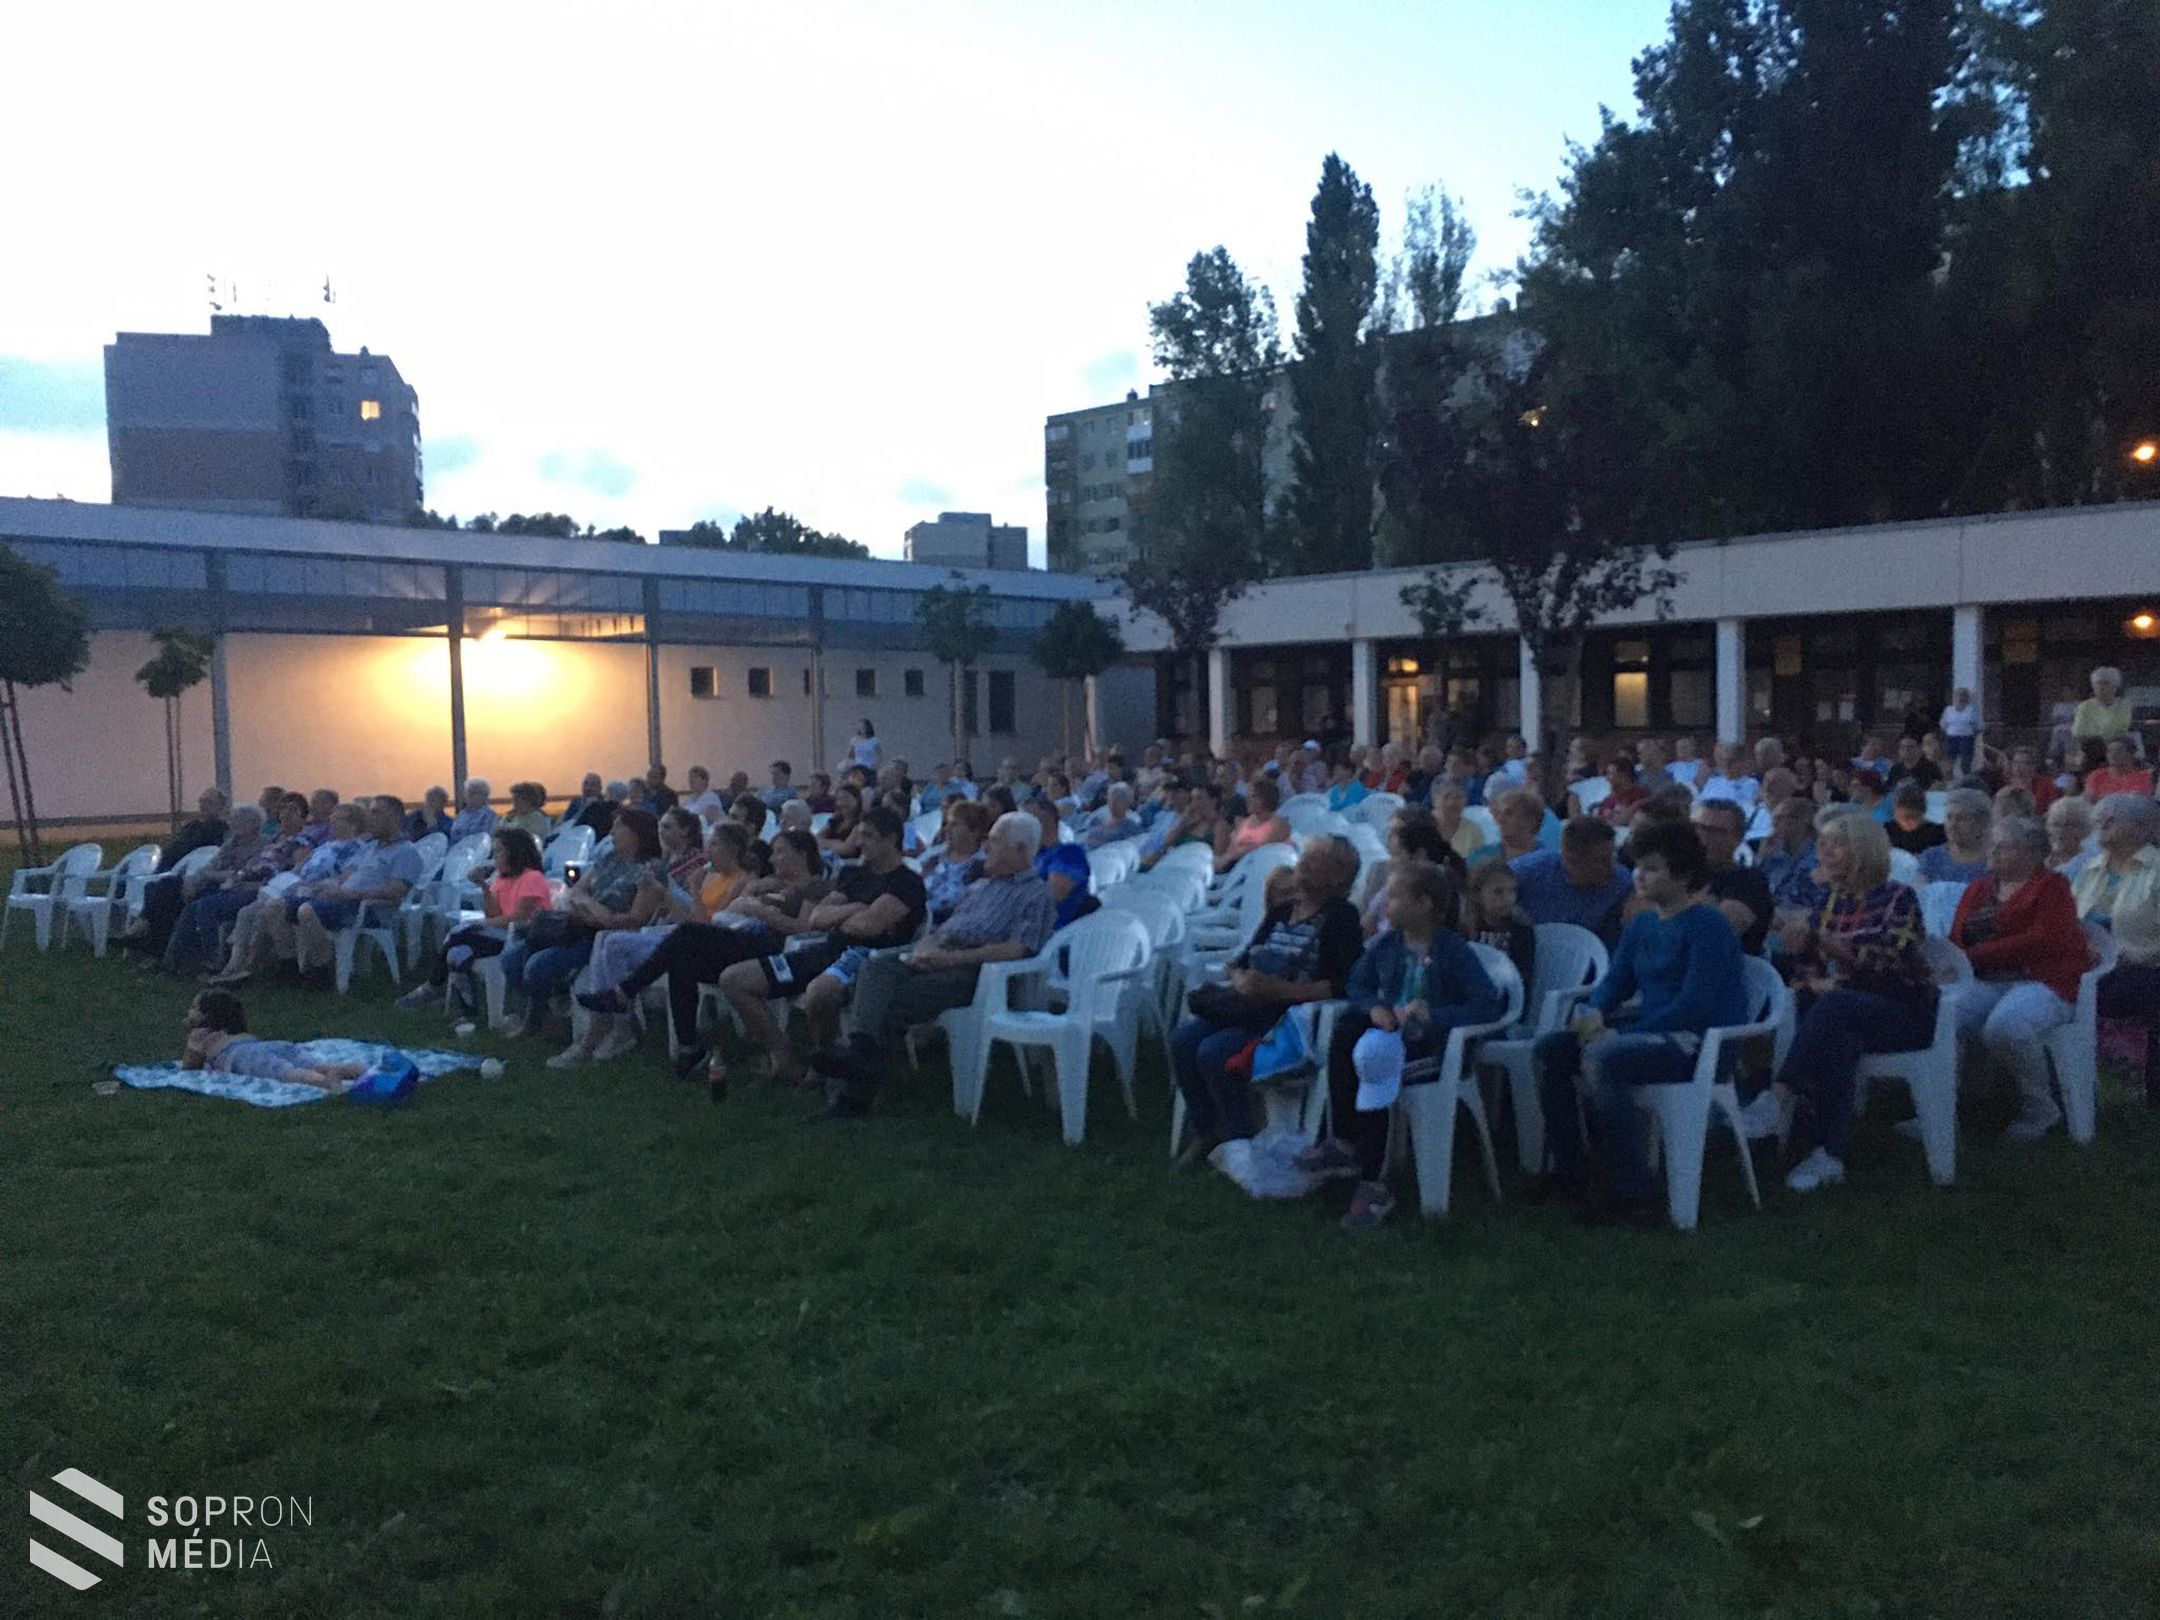 Nagy siker volt a nyáresti szabadtéri mozi a Jereván lakótelepen 